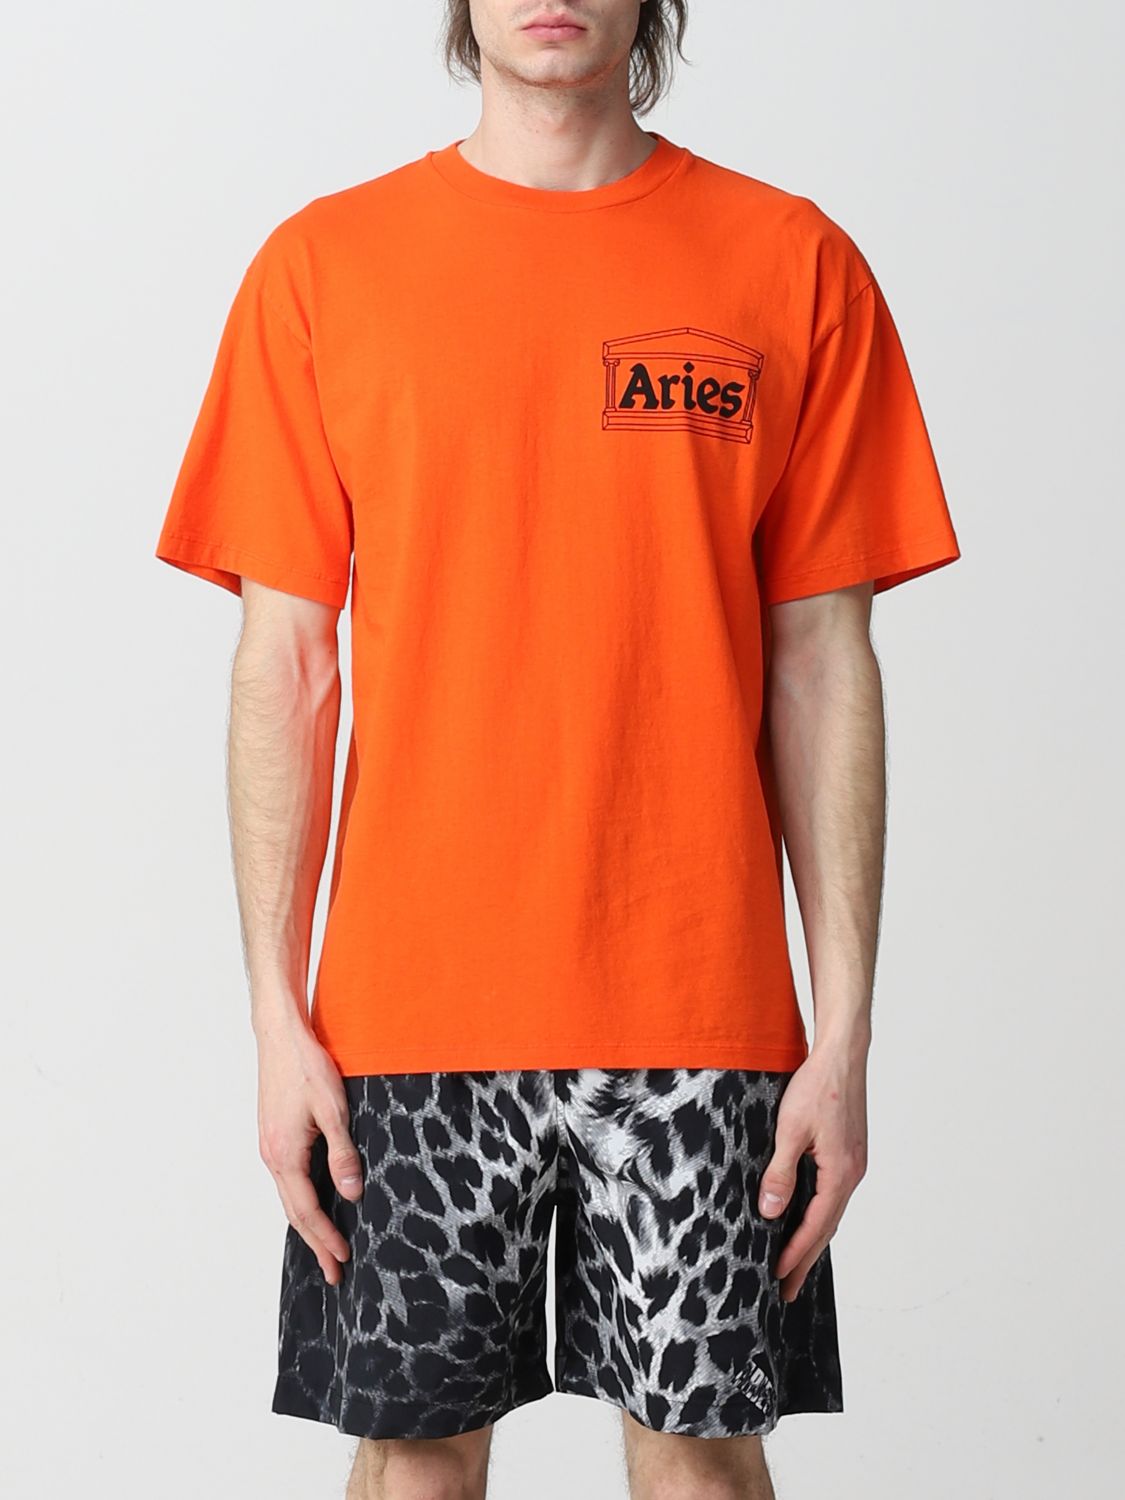 Aries T Shirt For Man Orange Aries T Shirt Ssar60000 Online On